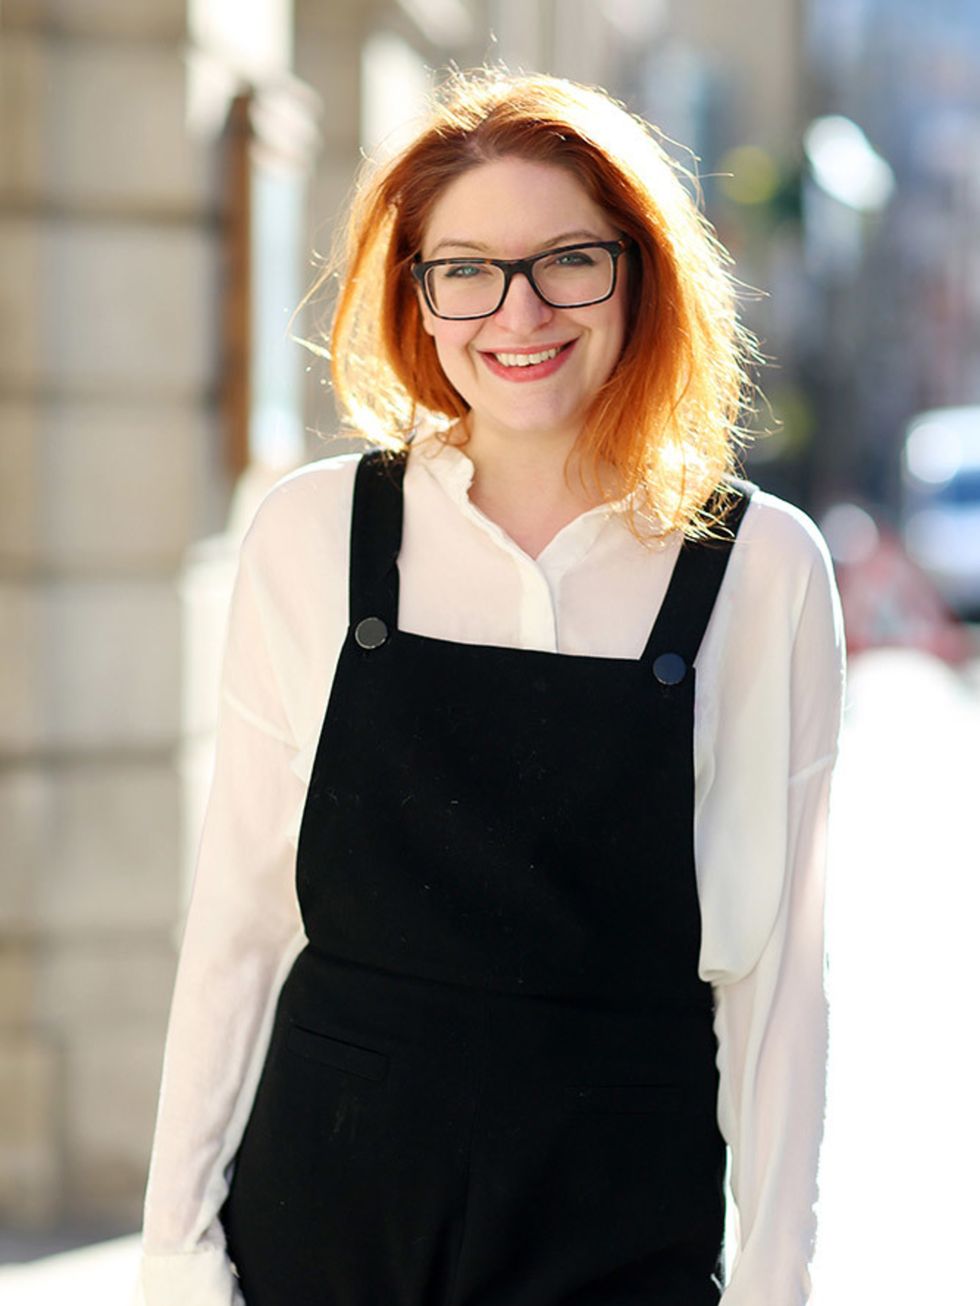 <p>Natasha Pearlman - Deputy Editor</p>

<p>Prada glasses, Cos shirt</p>